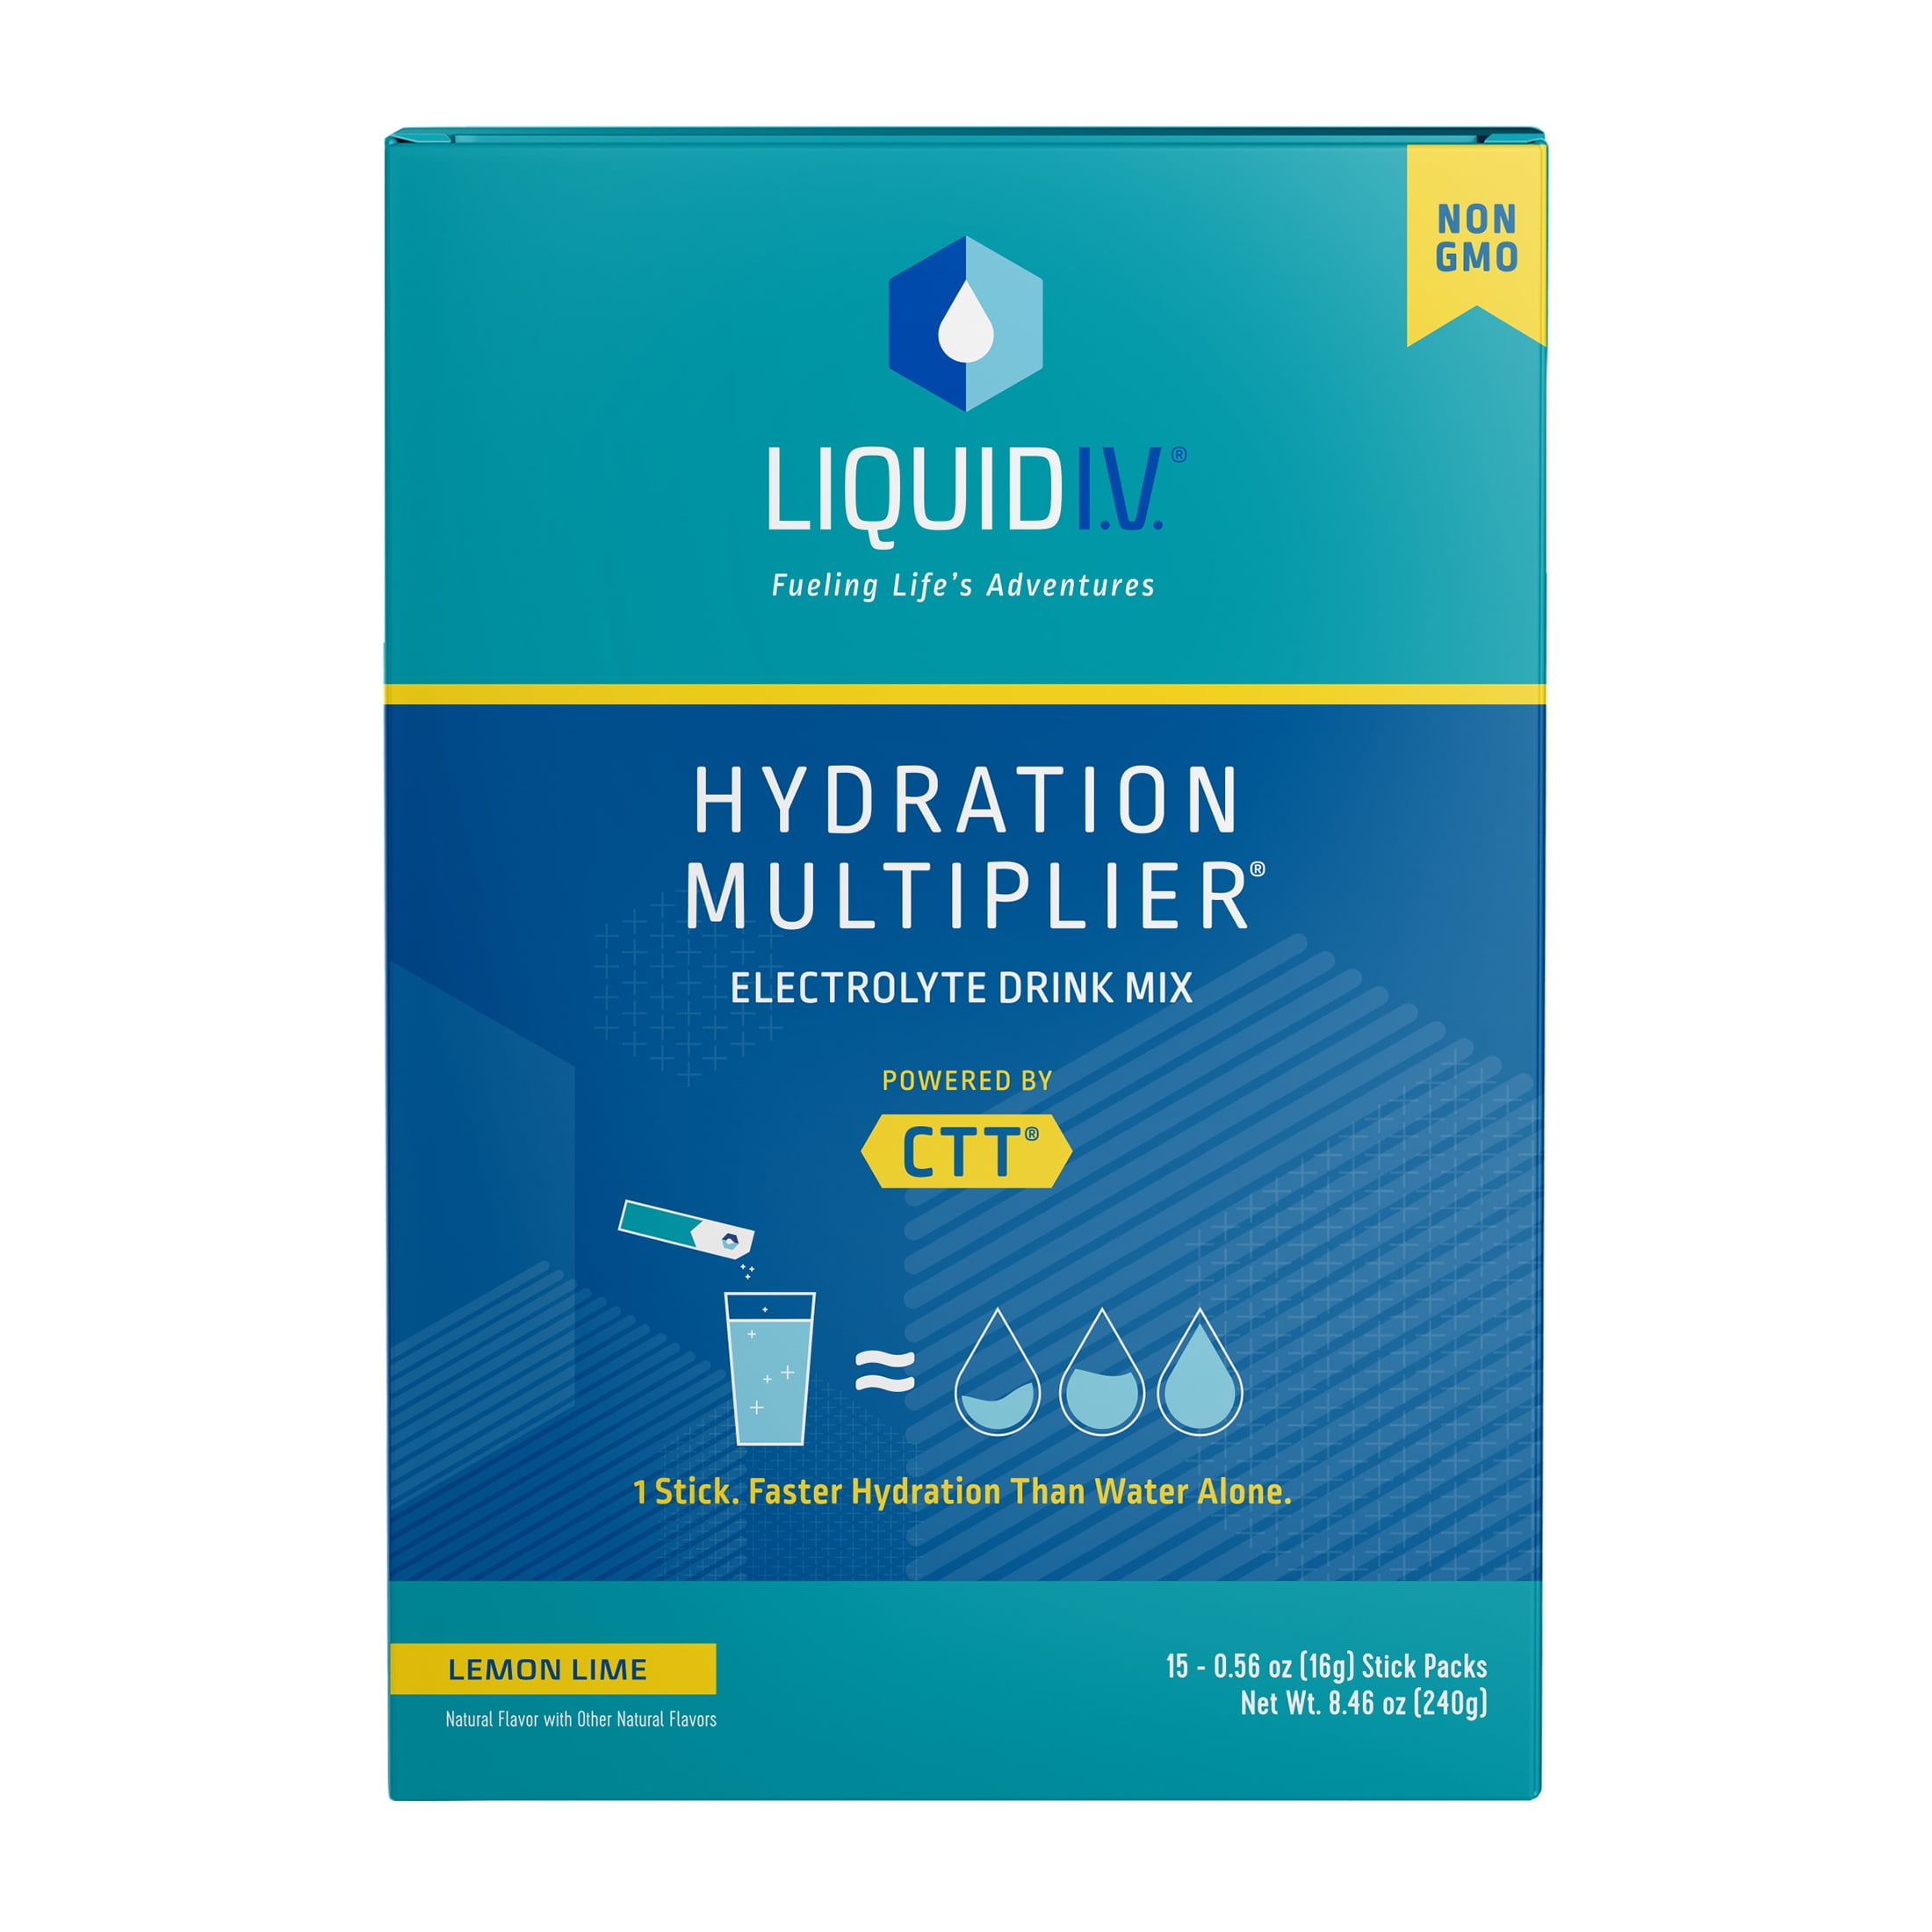 Liquid I.V. Hydration Multiplier, Lemon Lime - 9.03 oz pouch